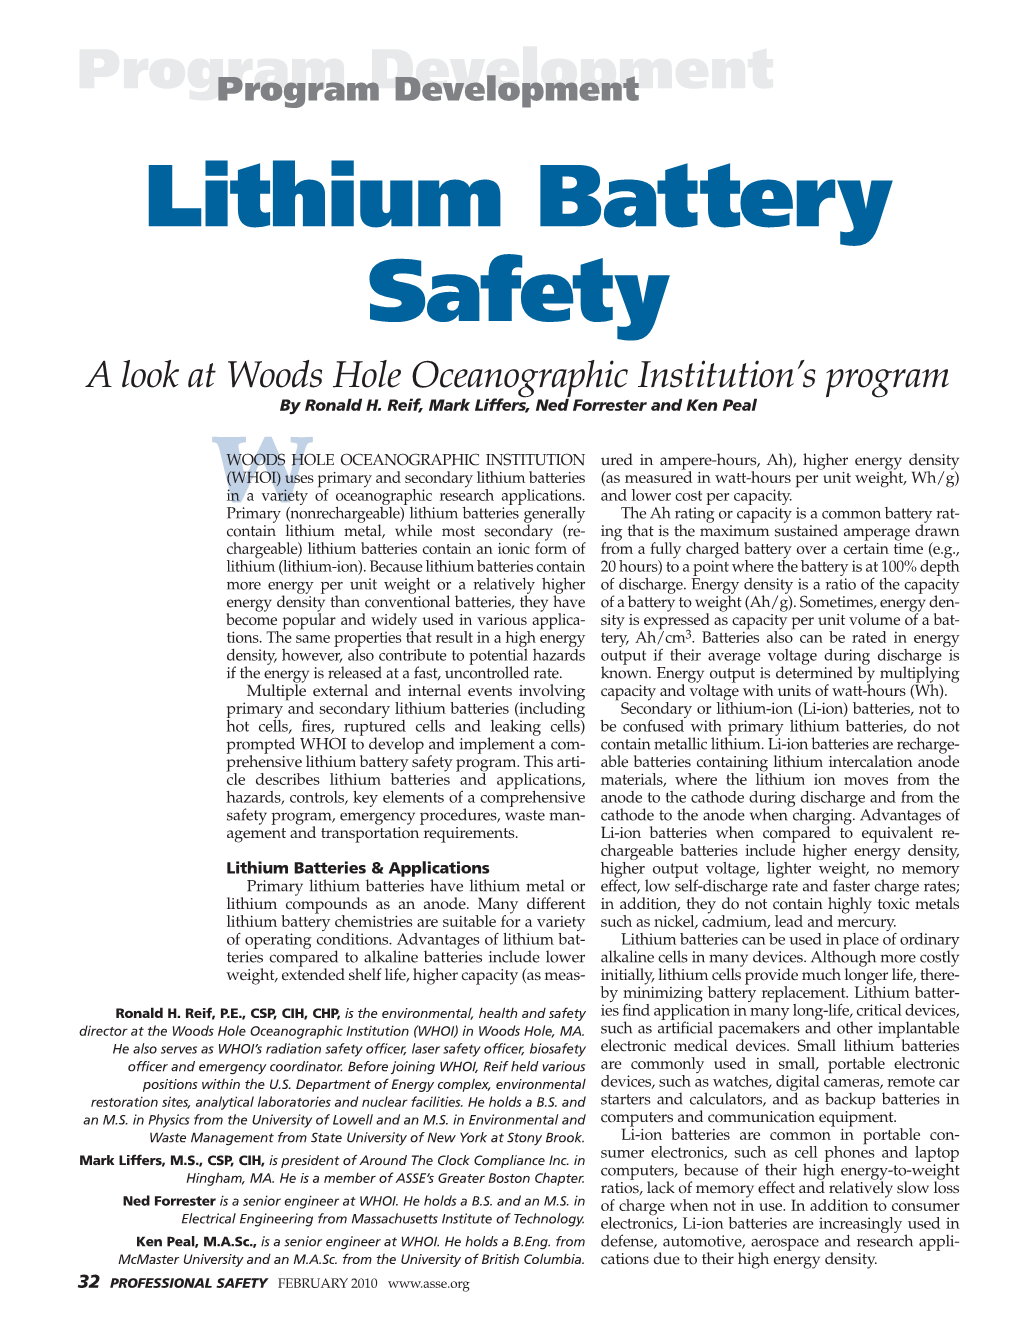 Lithium Battery Safety Program